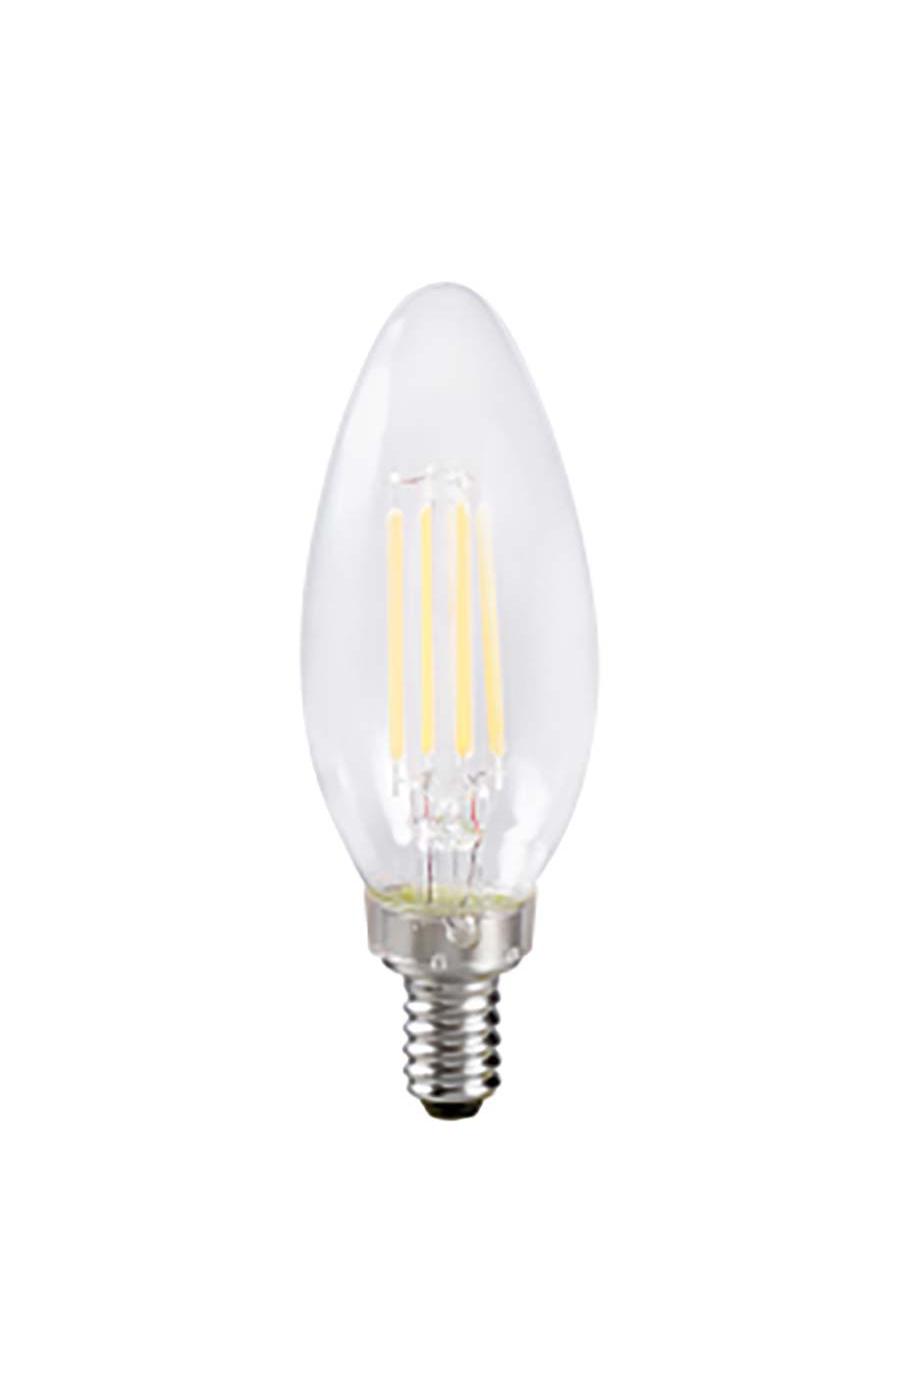 Sylvania ECO B10 40-Watt Soft White Clear LED Light Bulbs; image 2 of 2